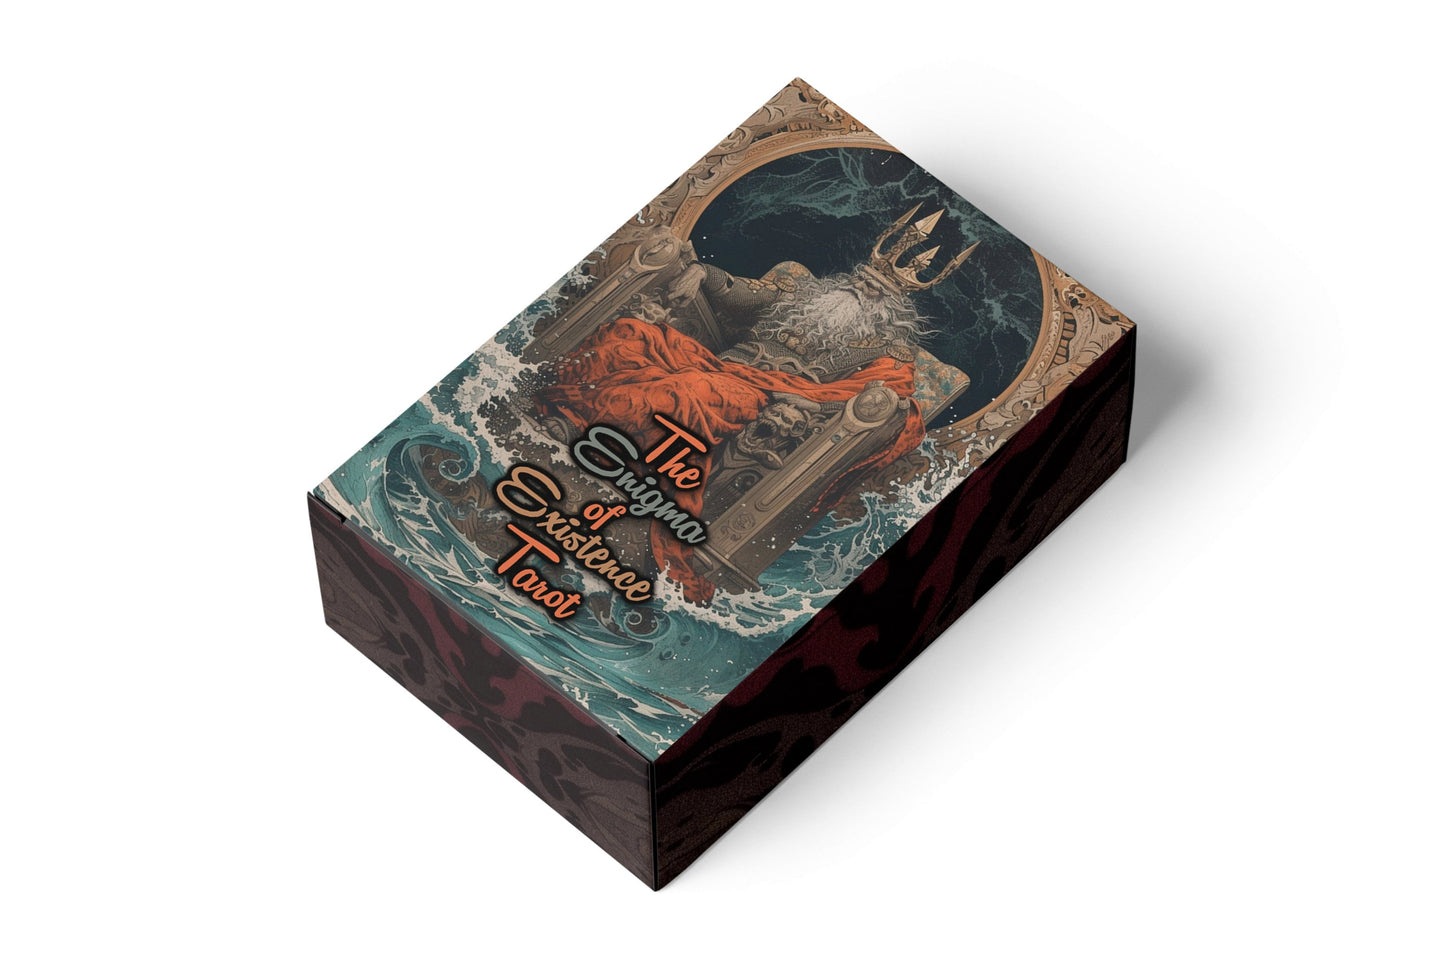 The Enigma of Existence Tarot - 78 cards - journey through evocative artwork